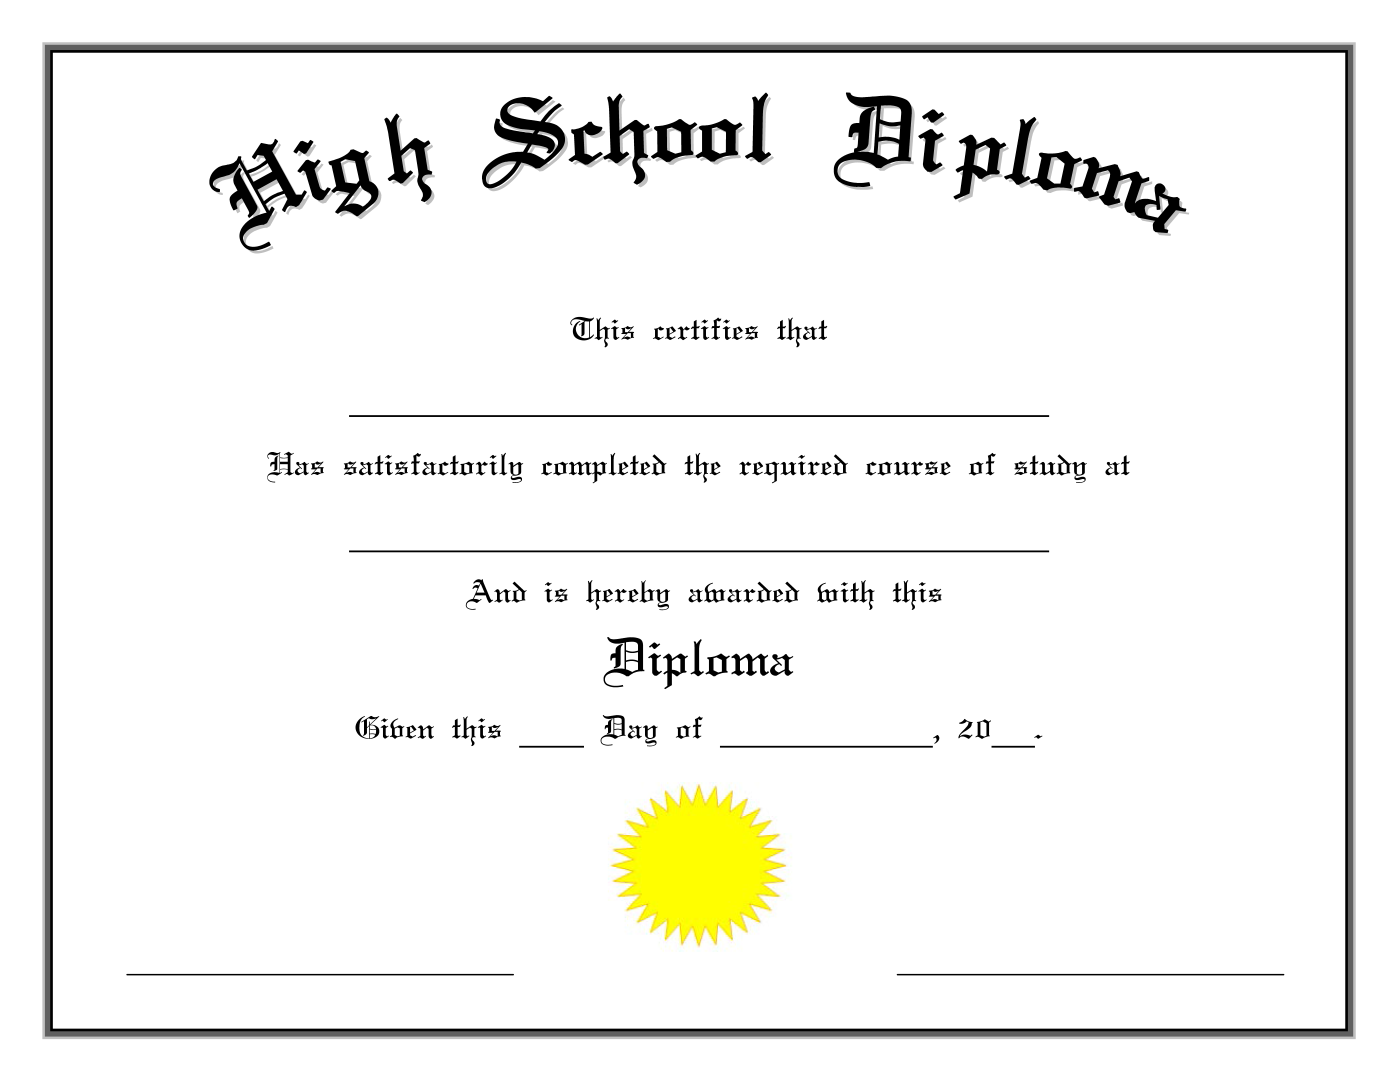 High School Diploma main image